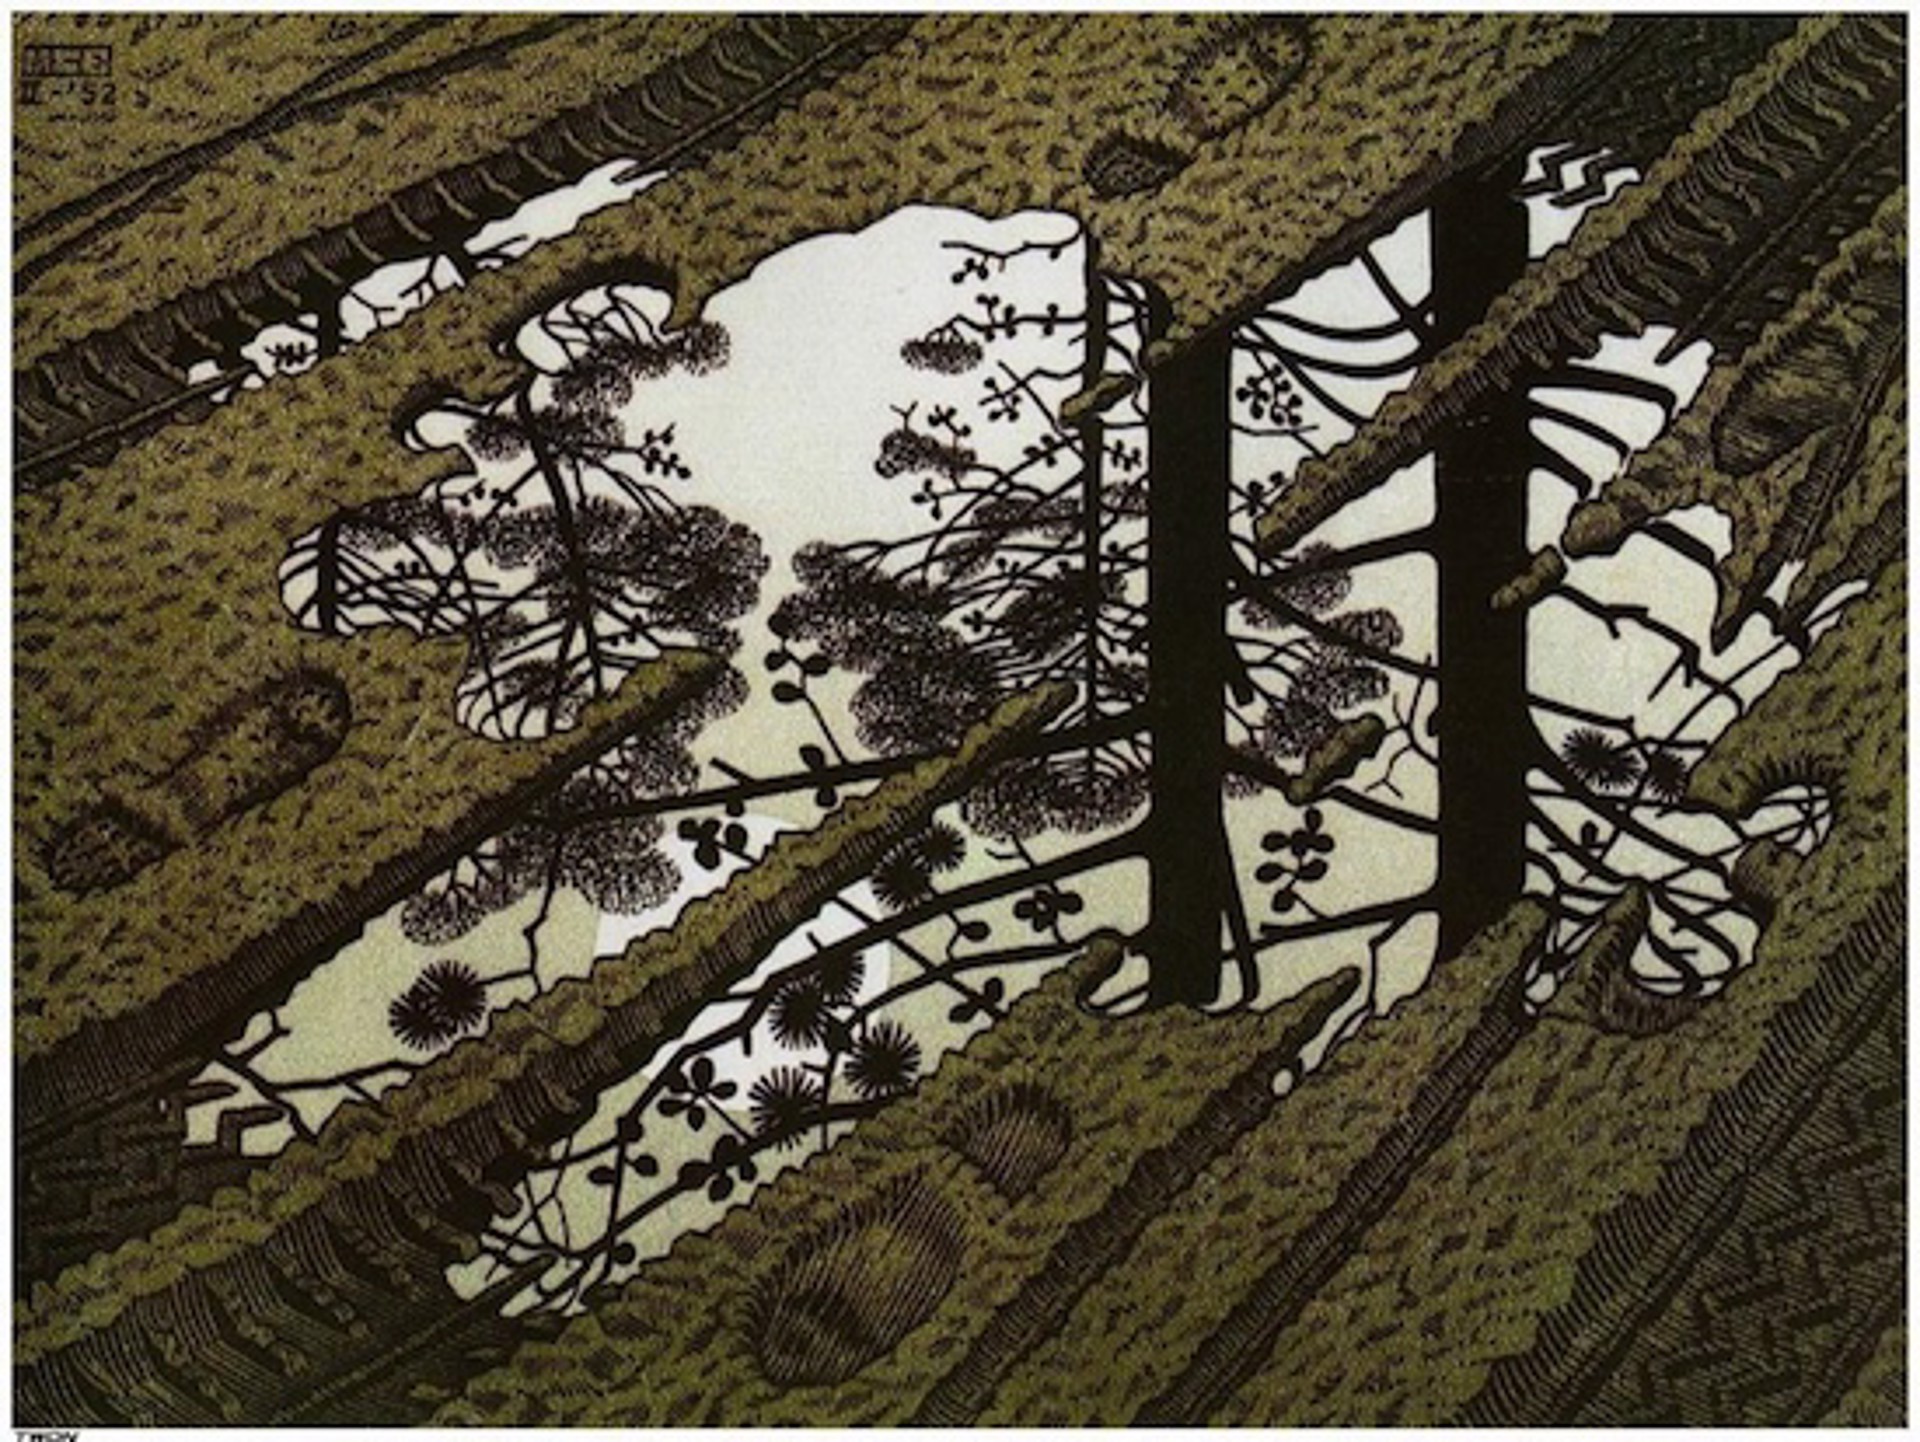 Puddle by M.C. Escher